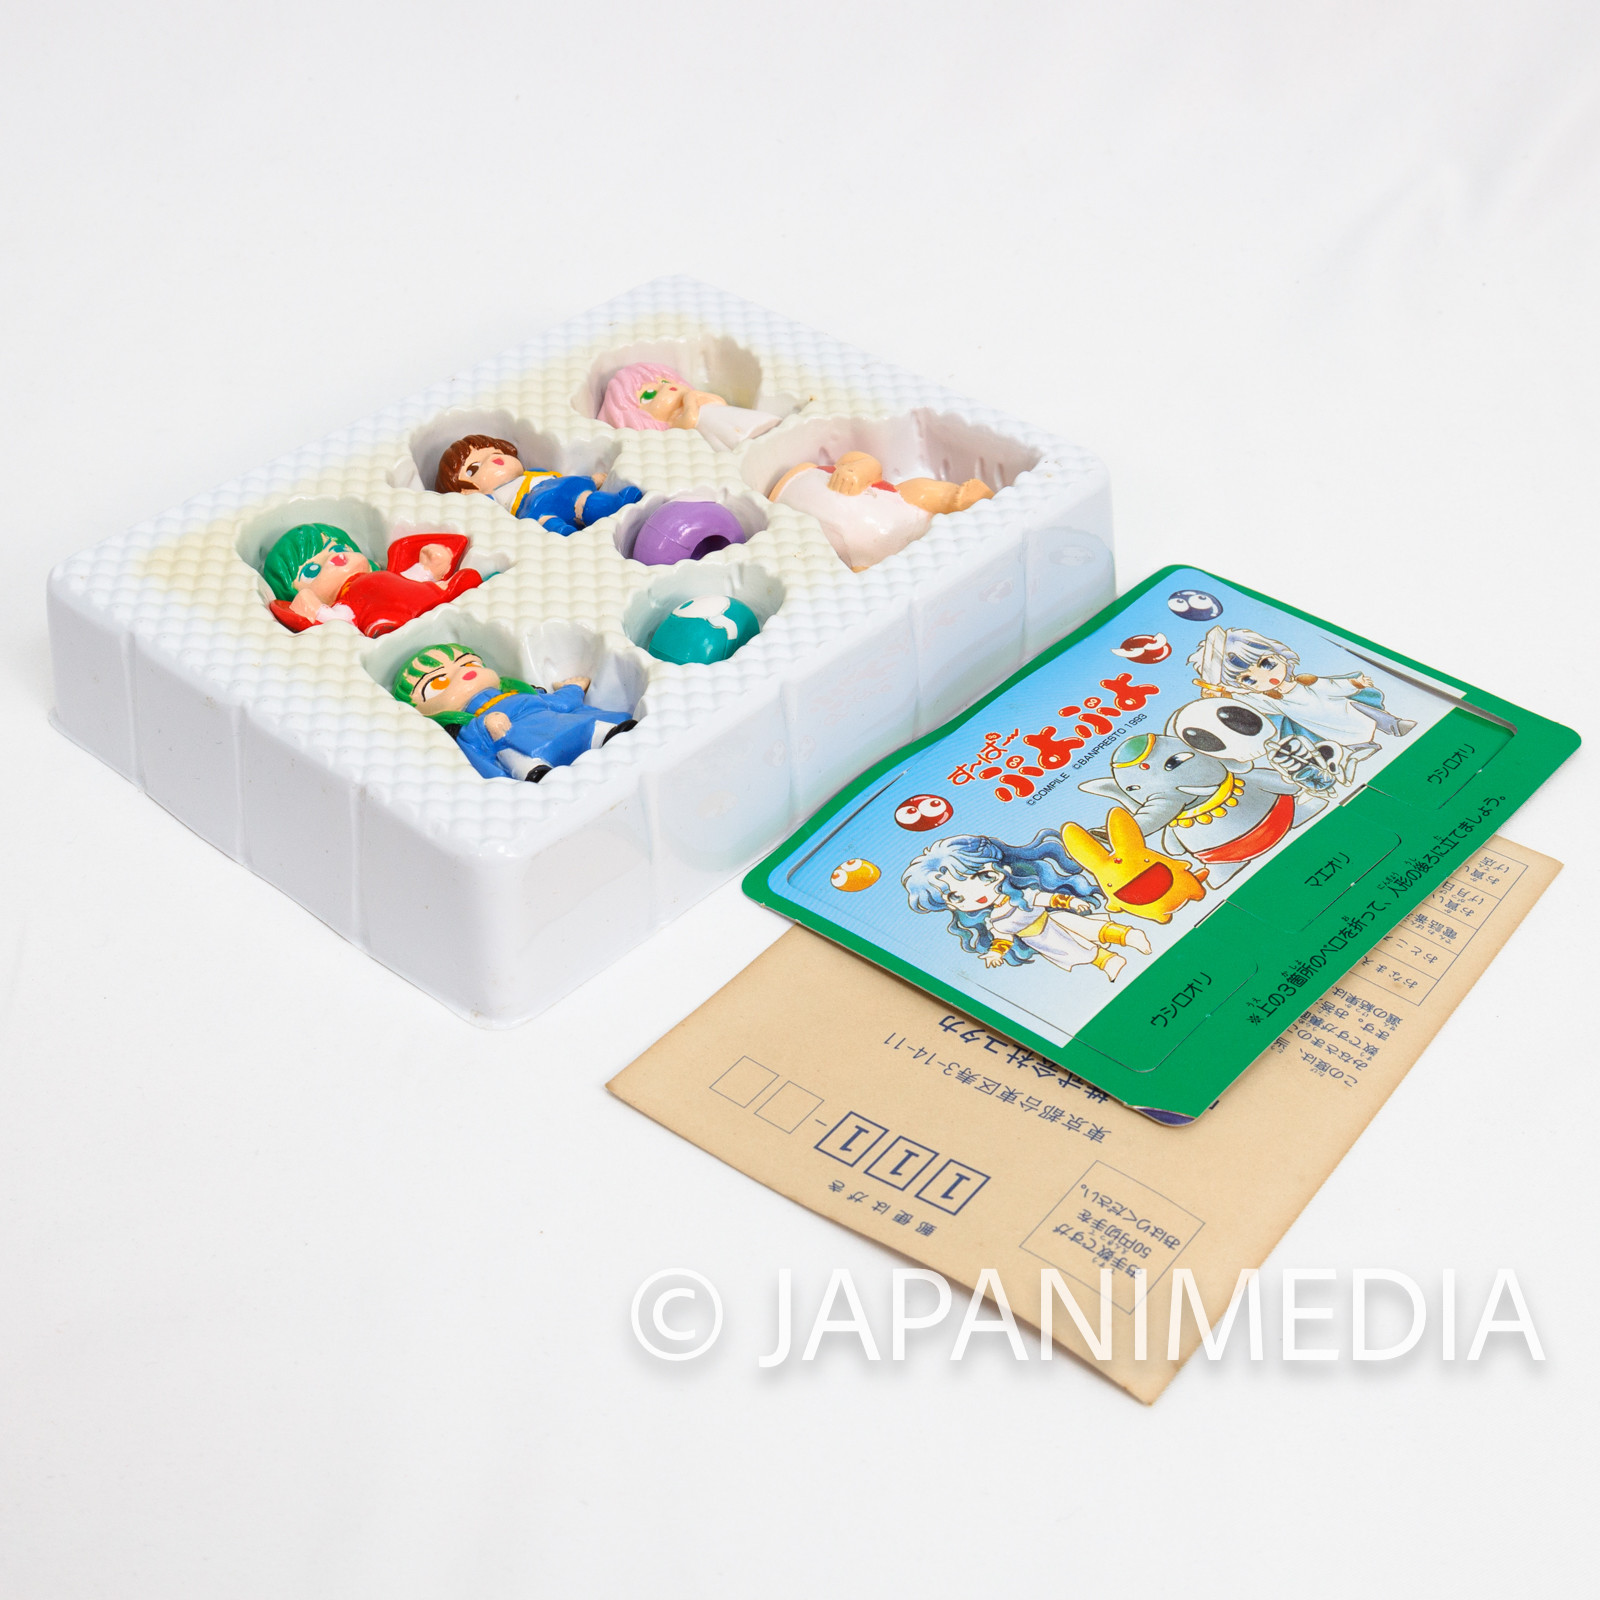 Retro RARE Puyo Puyo Pocket Hero Mini Figure Set Yutaka 1994 JAPAN GAME COMPILE